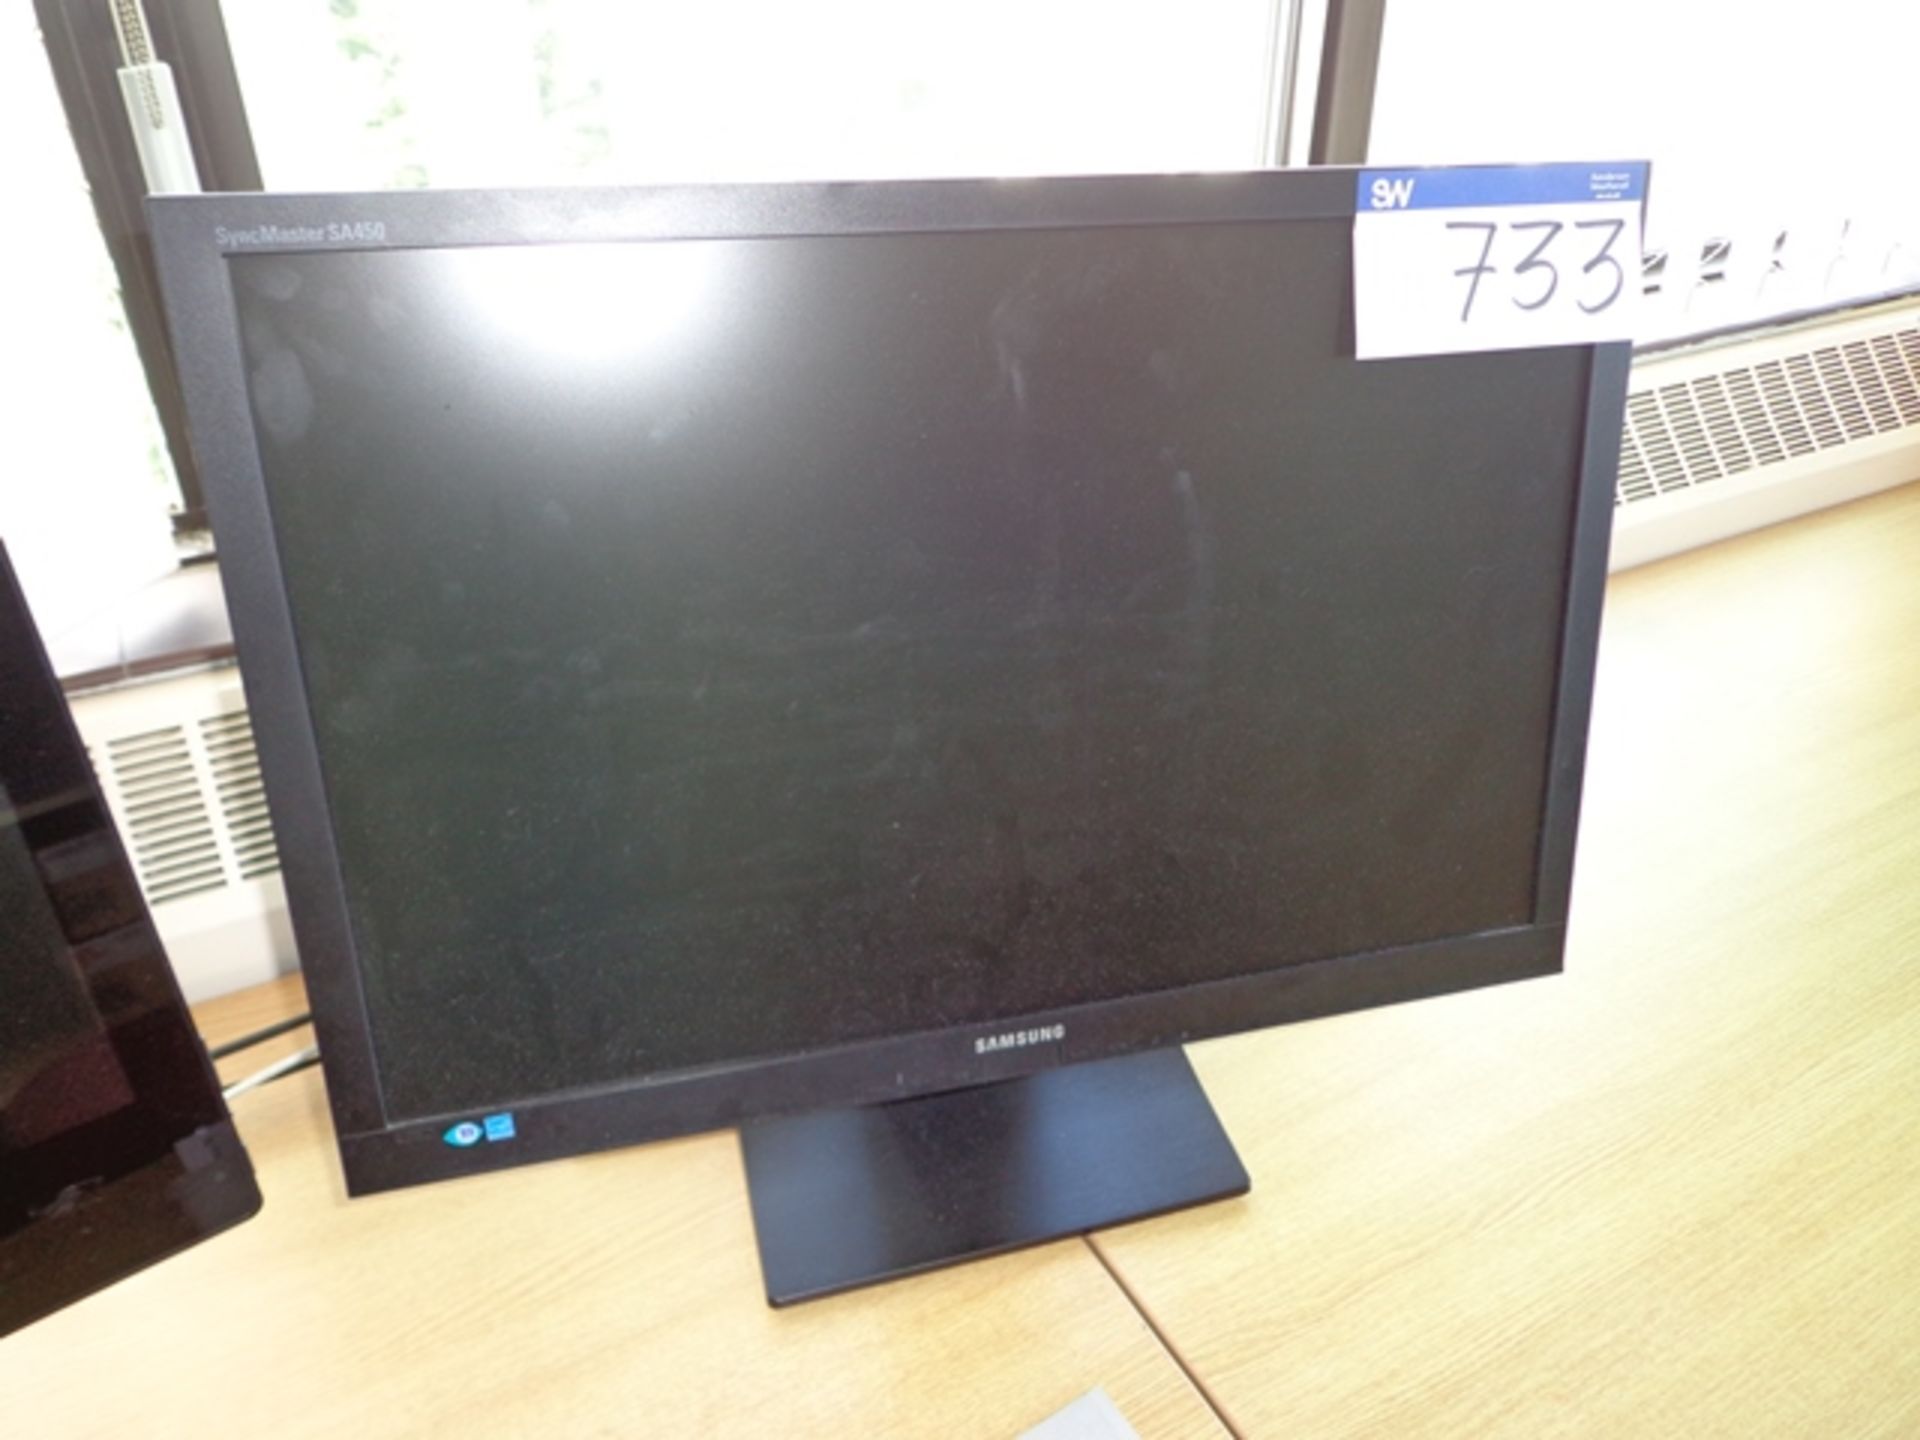 HP Compaq DX2300 Microtower Personal Computer c/w Samsung Syncmaster SA450 Flat Screen Monitor,